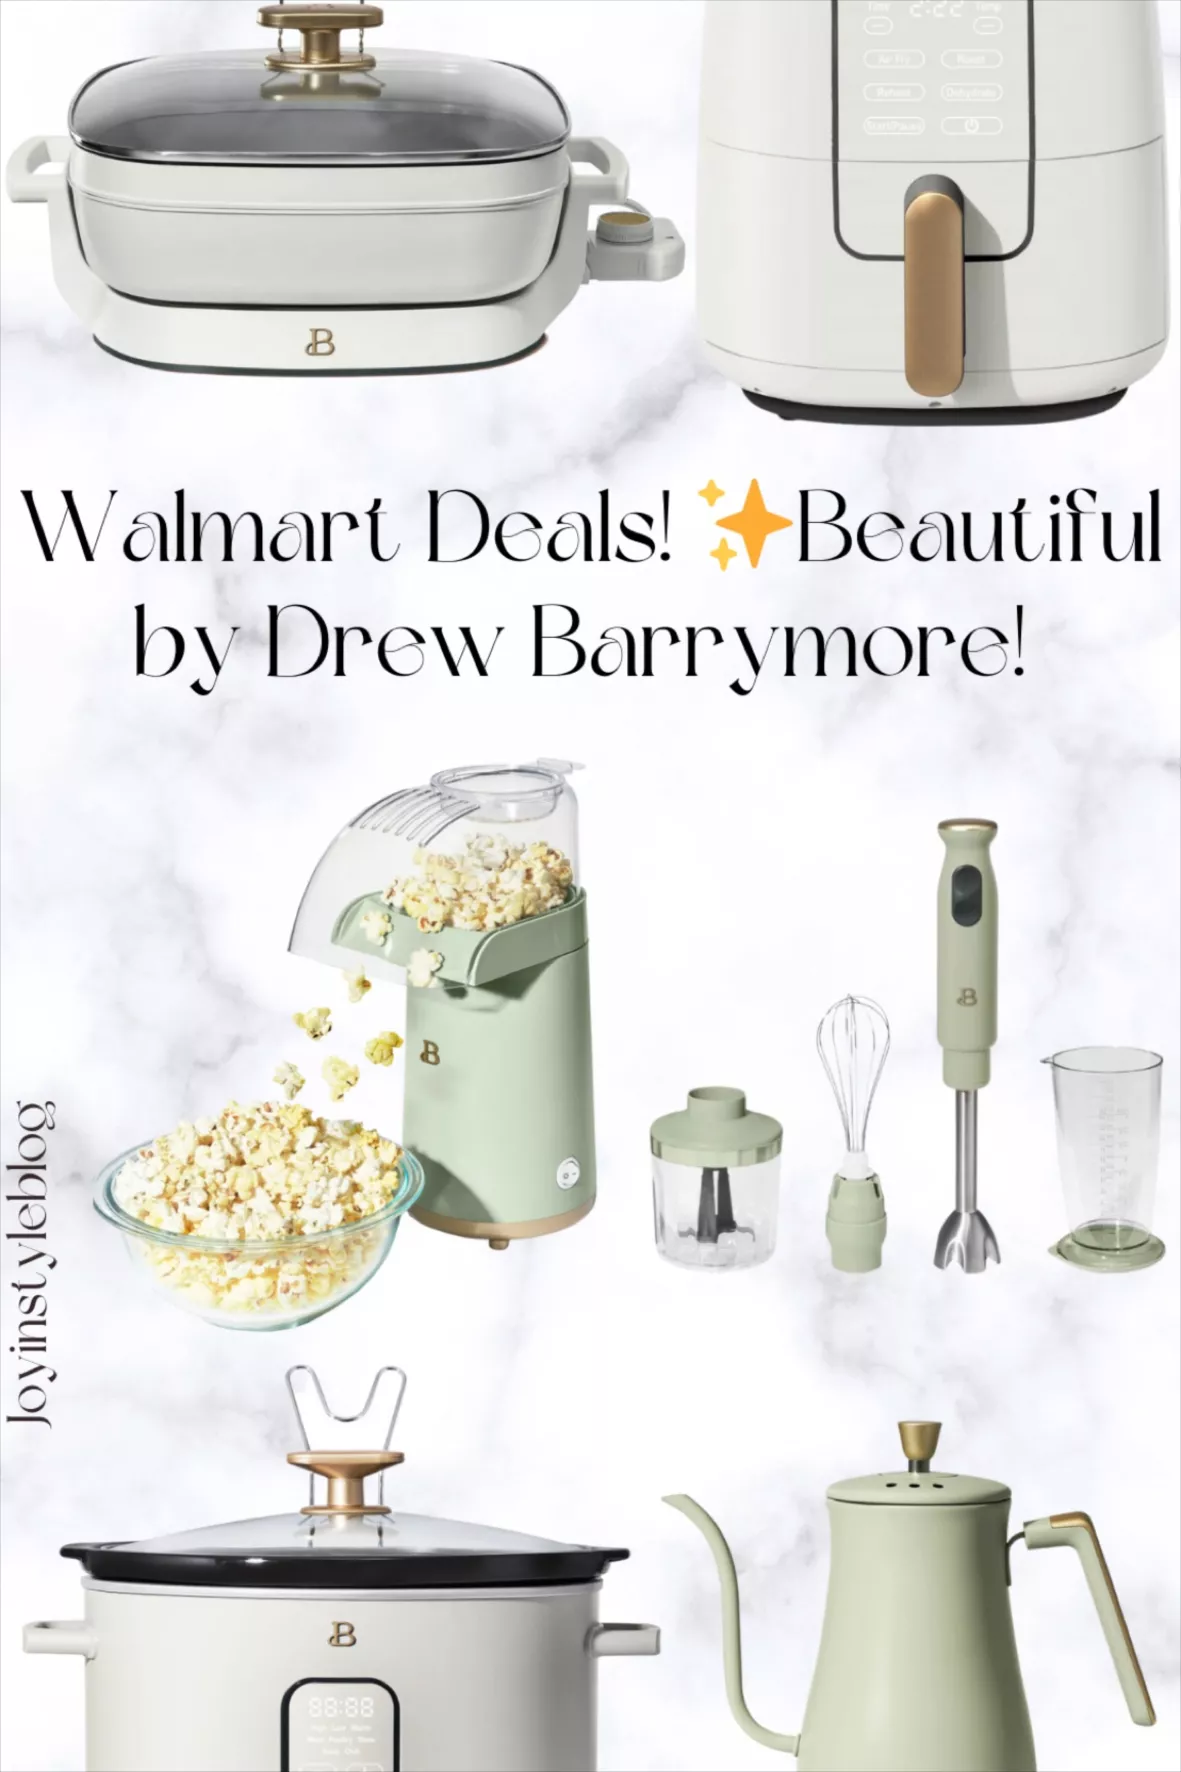 Drew Barrymore 3-Quart Air Fryer $29 at Walmart